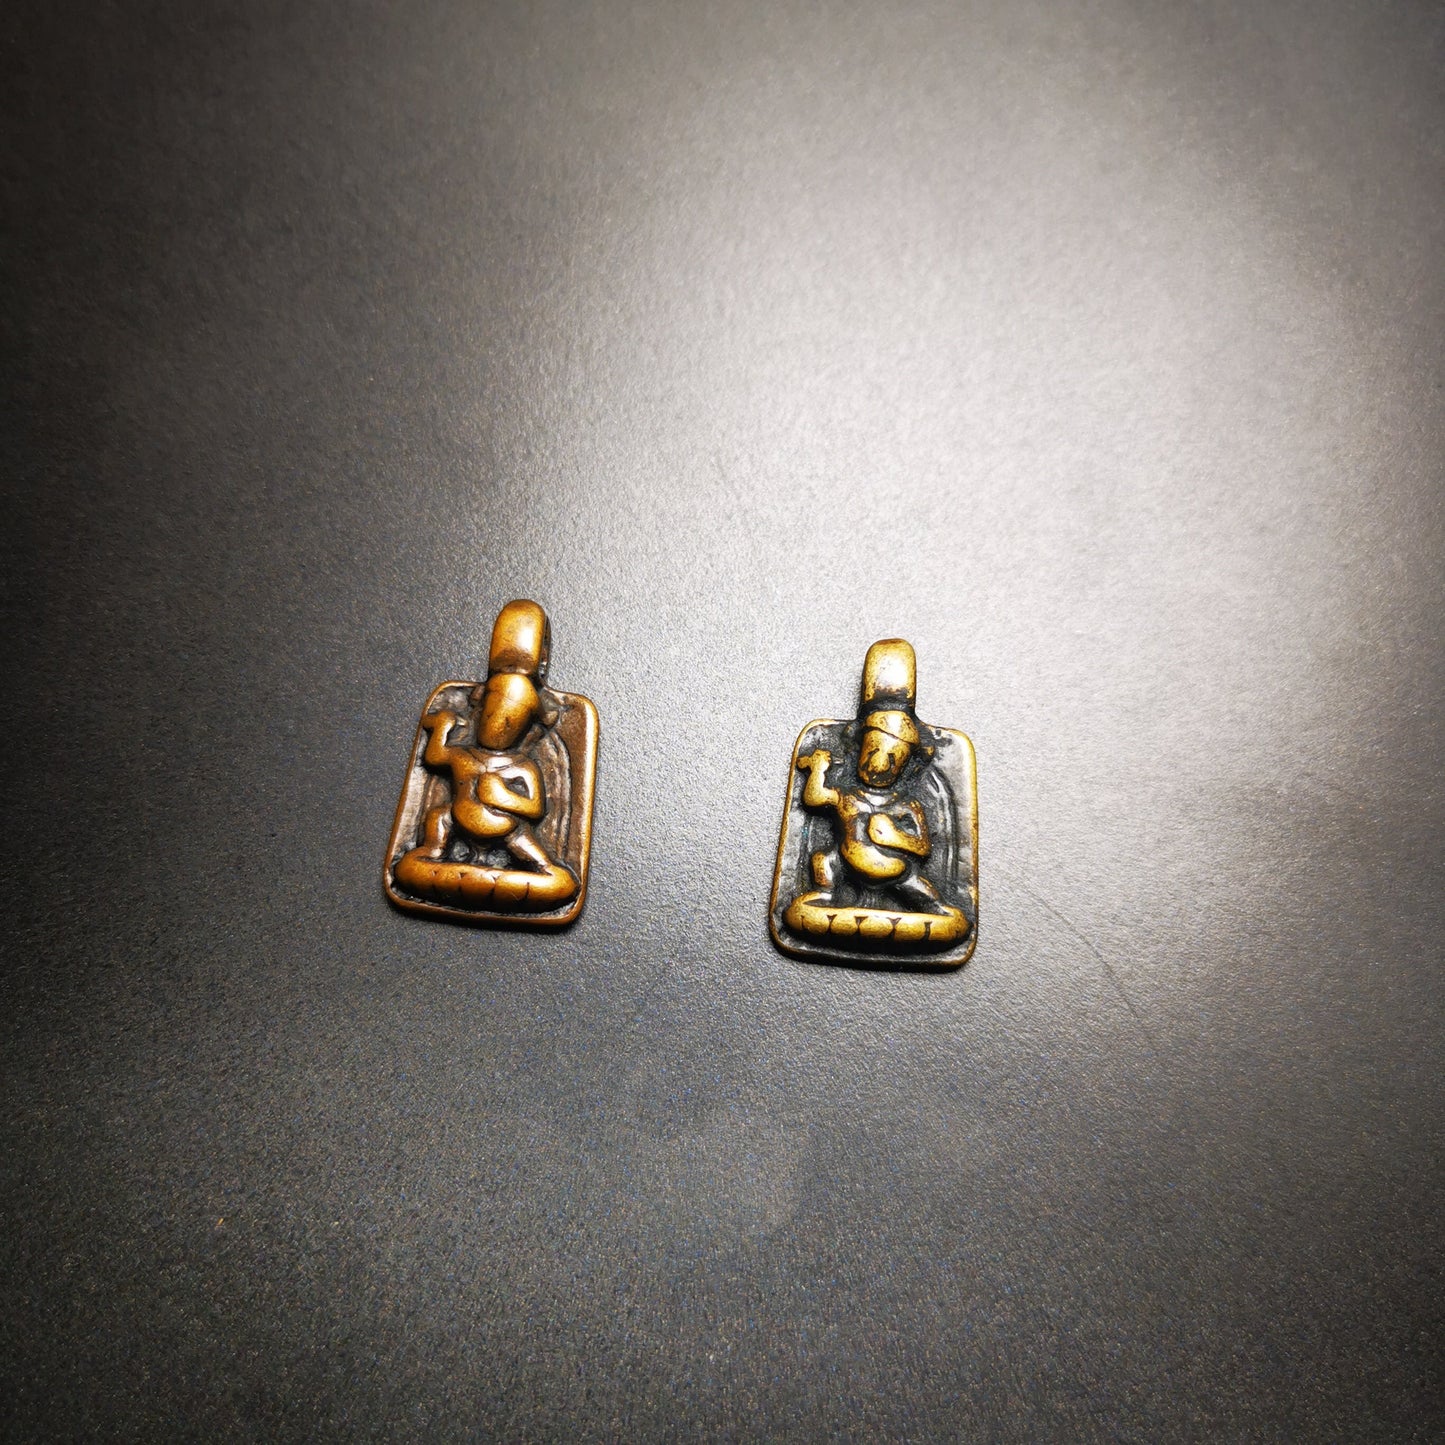 Gandhanra Handmade Vajrapani Tibetan Mala Counter, Mala Pendant,Mantra Dot Prayer Beads Accessories,Made of Brass